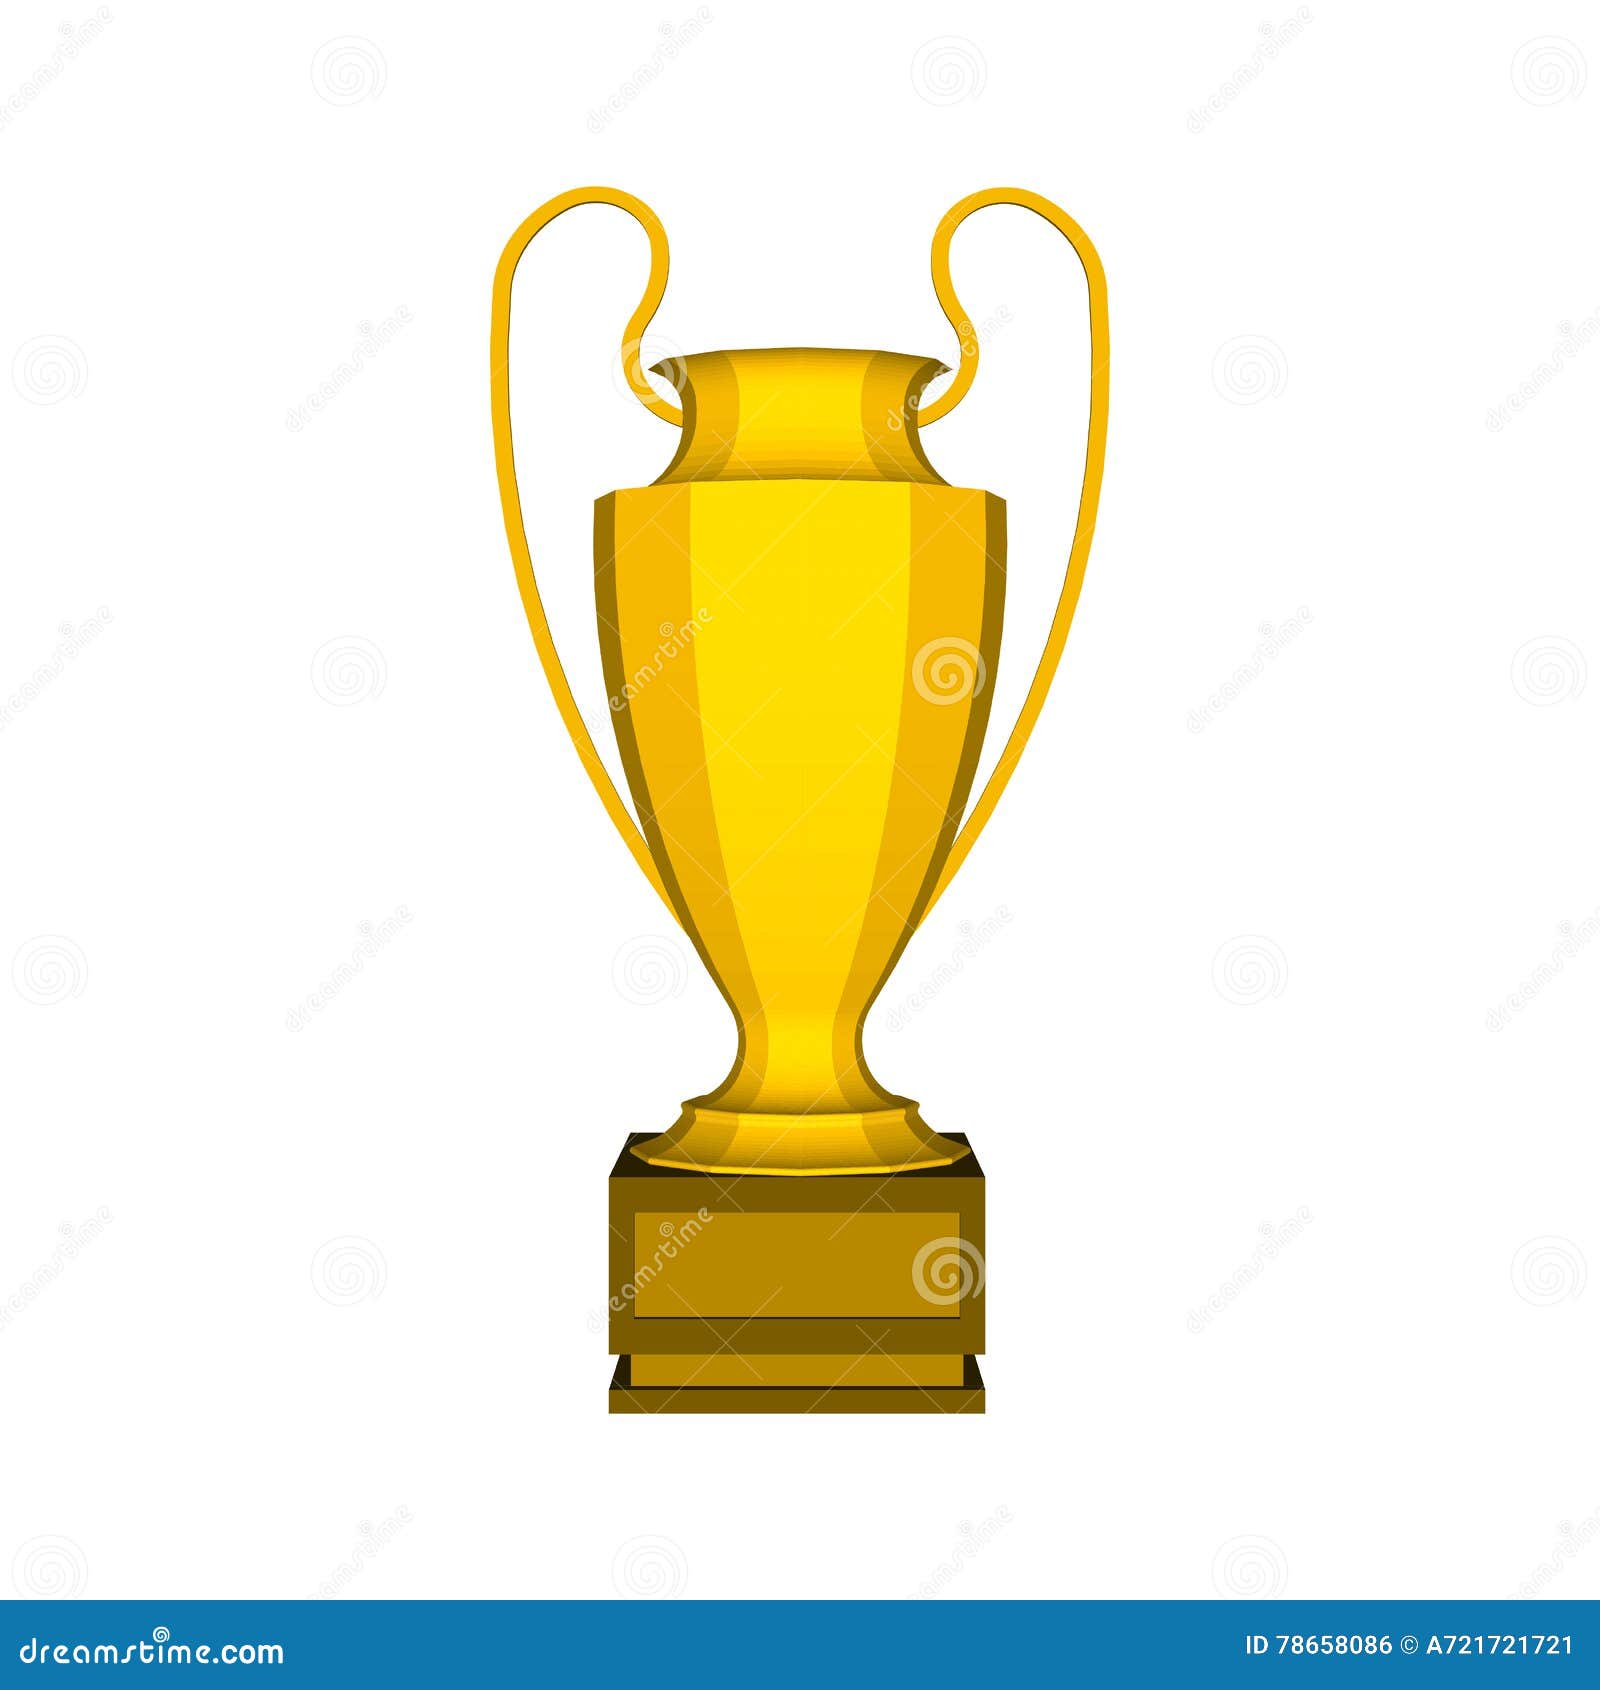 Download Trophy Mockup Free - Best Free Personalized Award Trophy ...